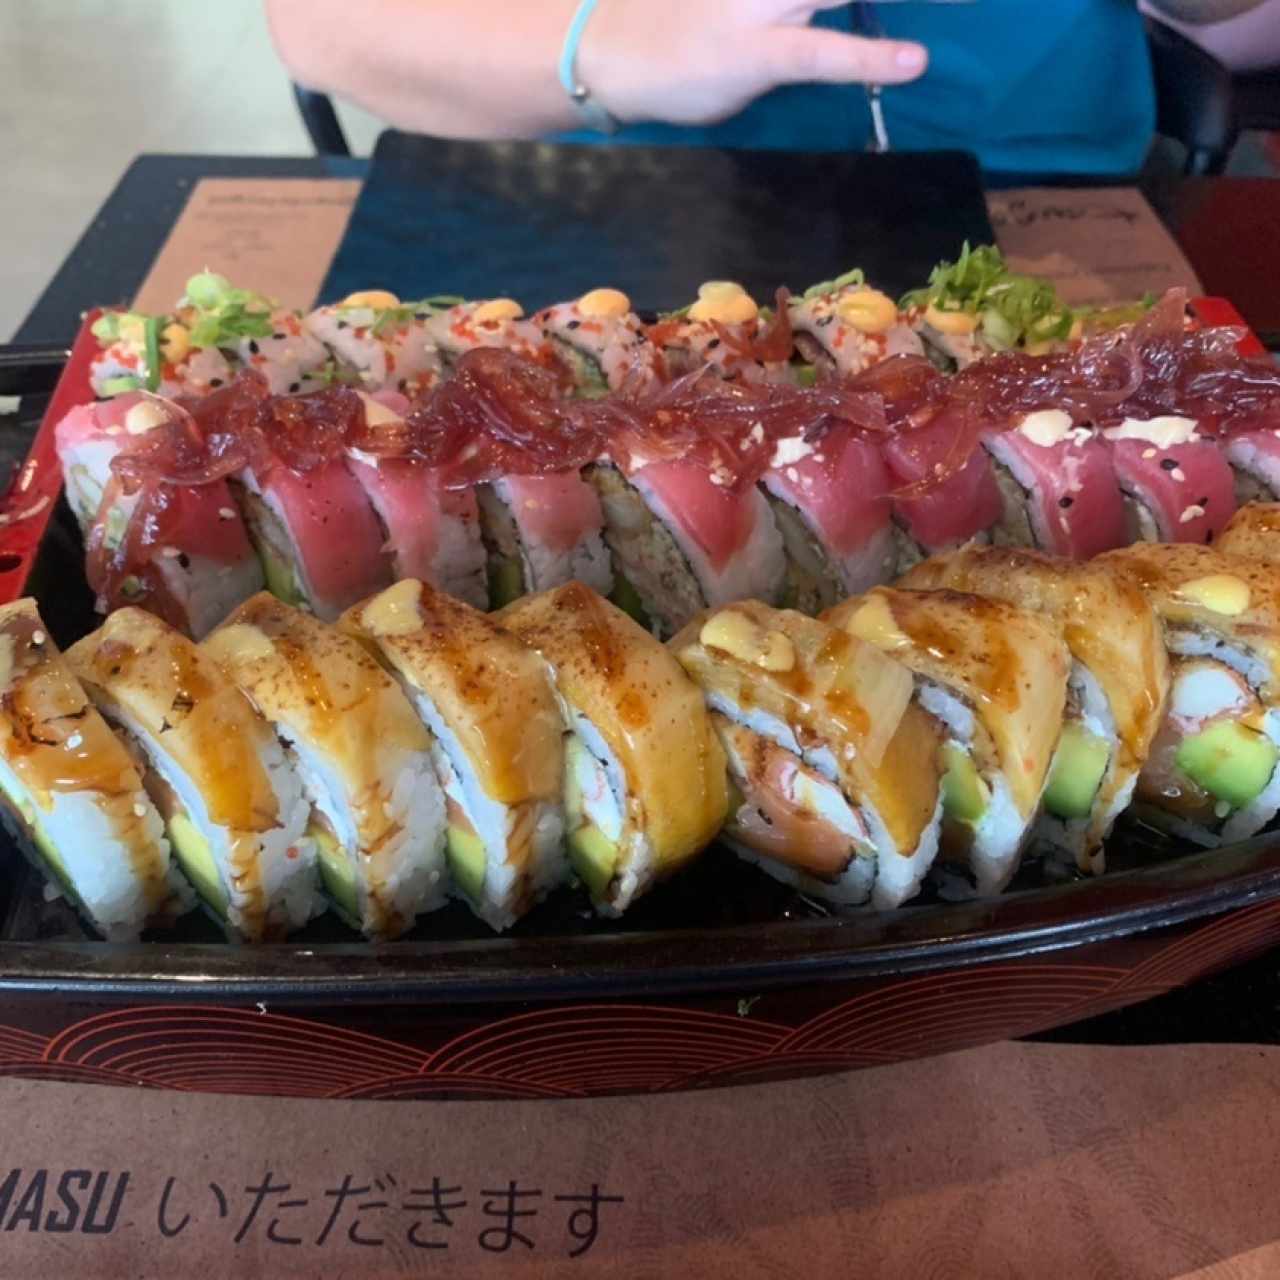 Bote de sushi variado